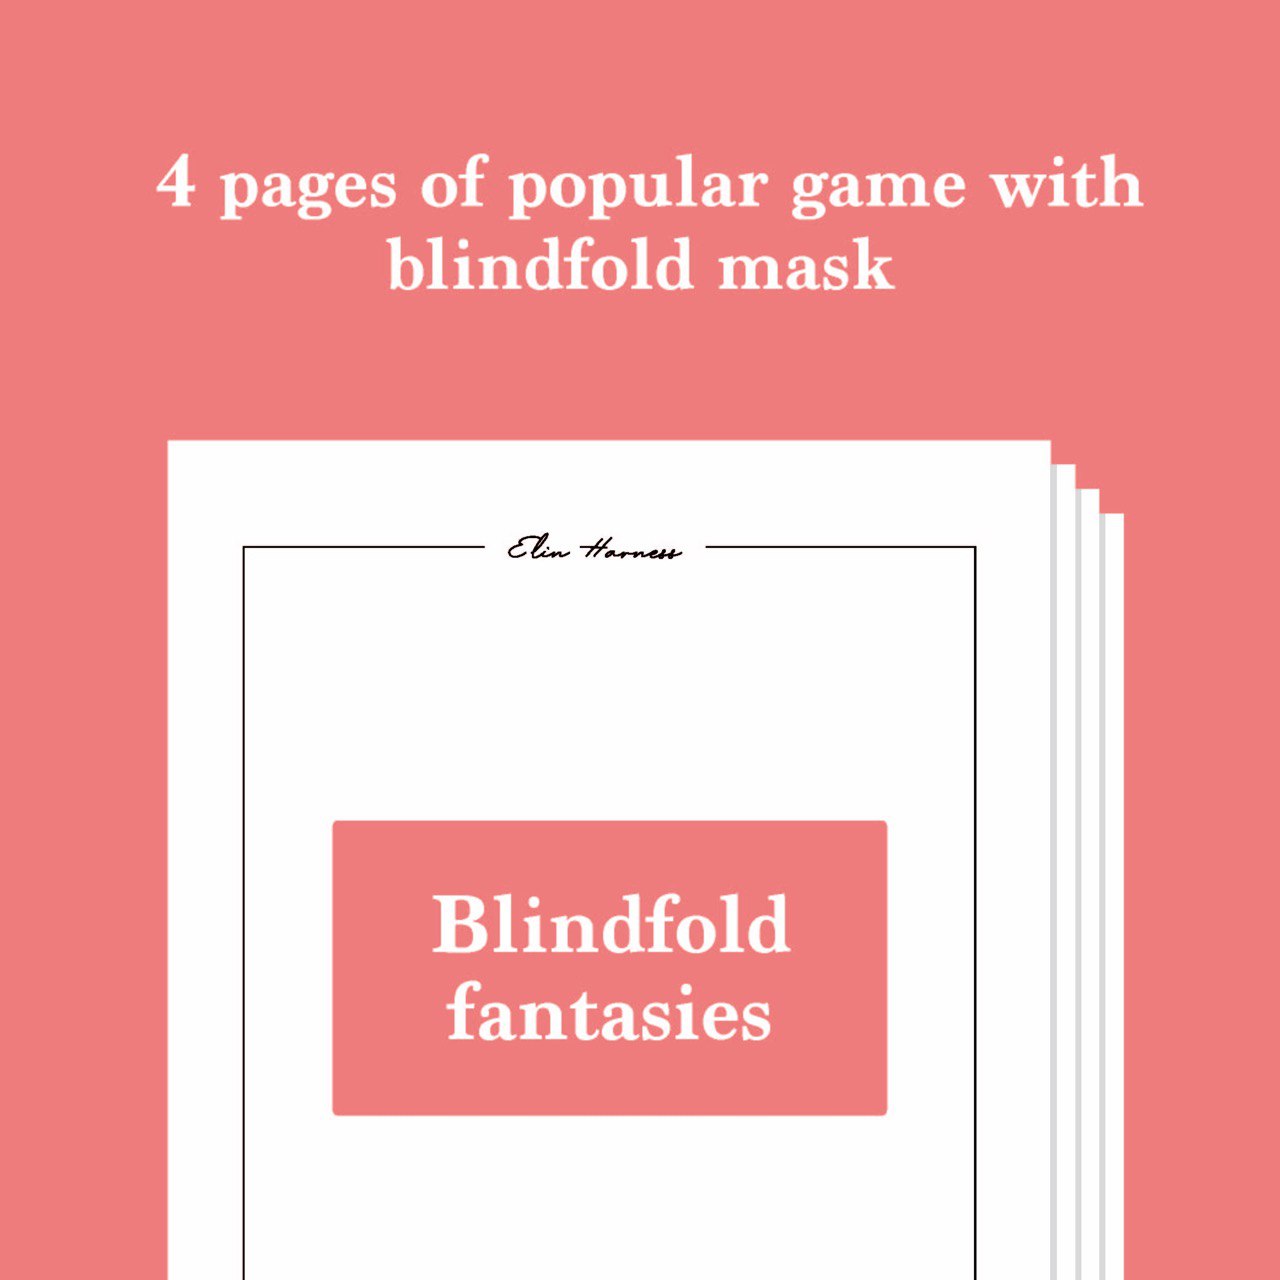 Blindfold fantasies